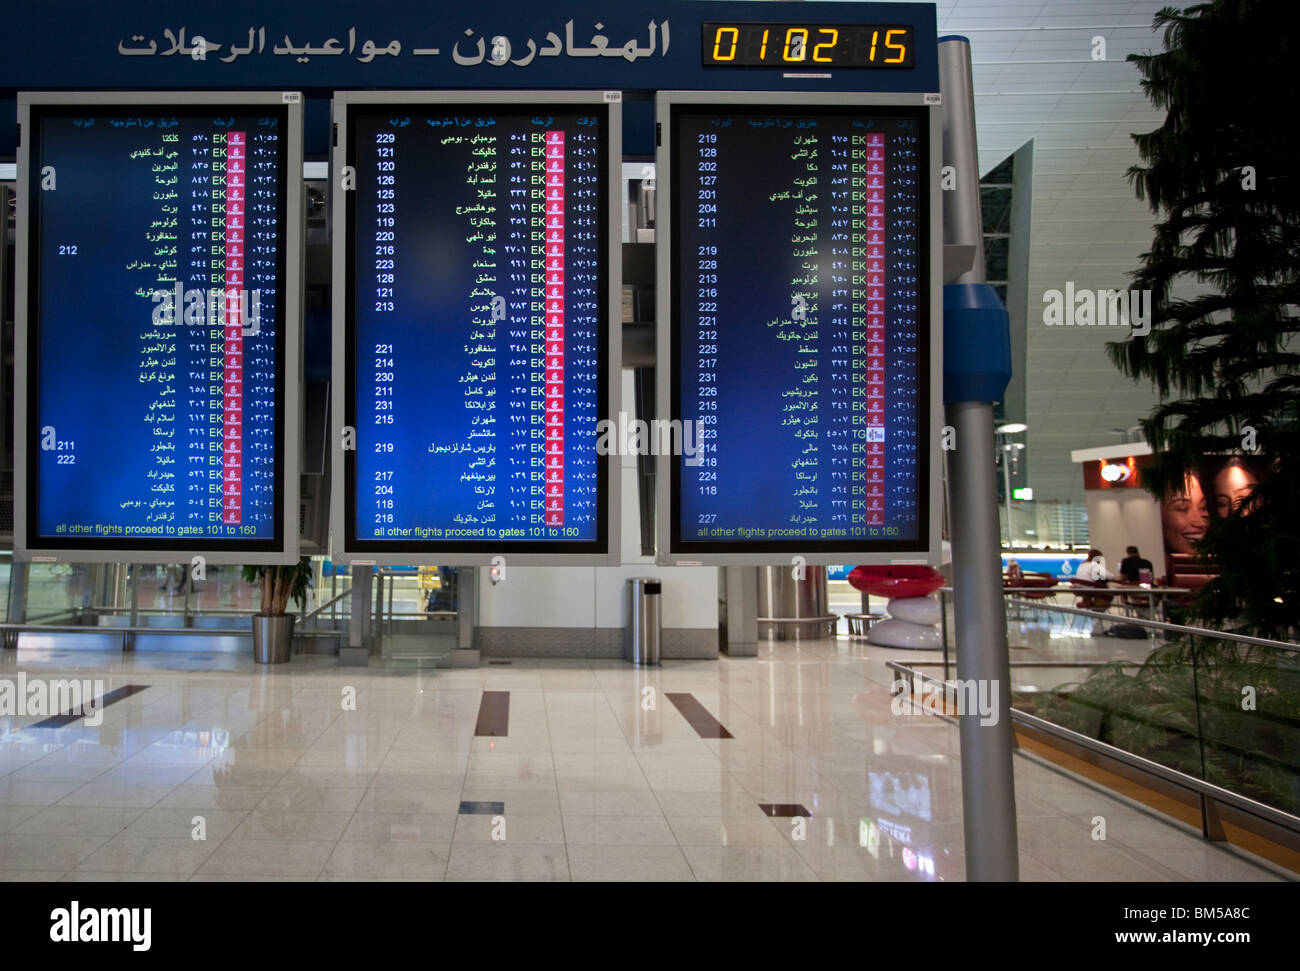 Departure board indicating destinations in Arabic language and script, Dubai International airport DXB Stock Photo